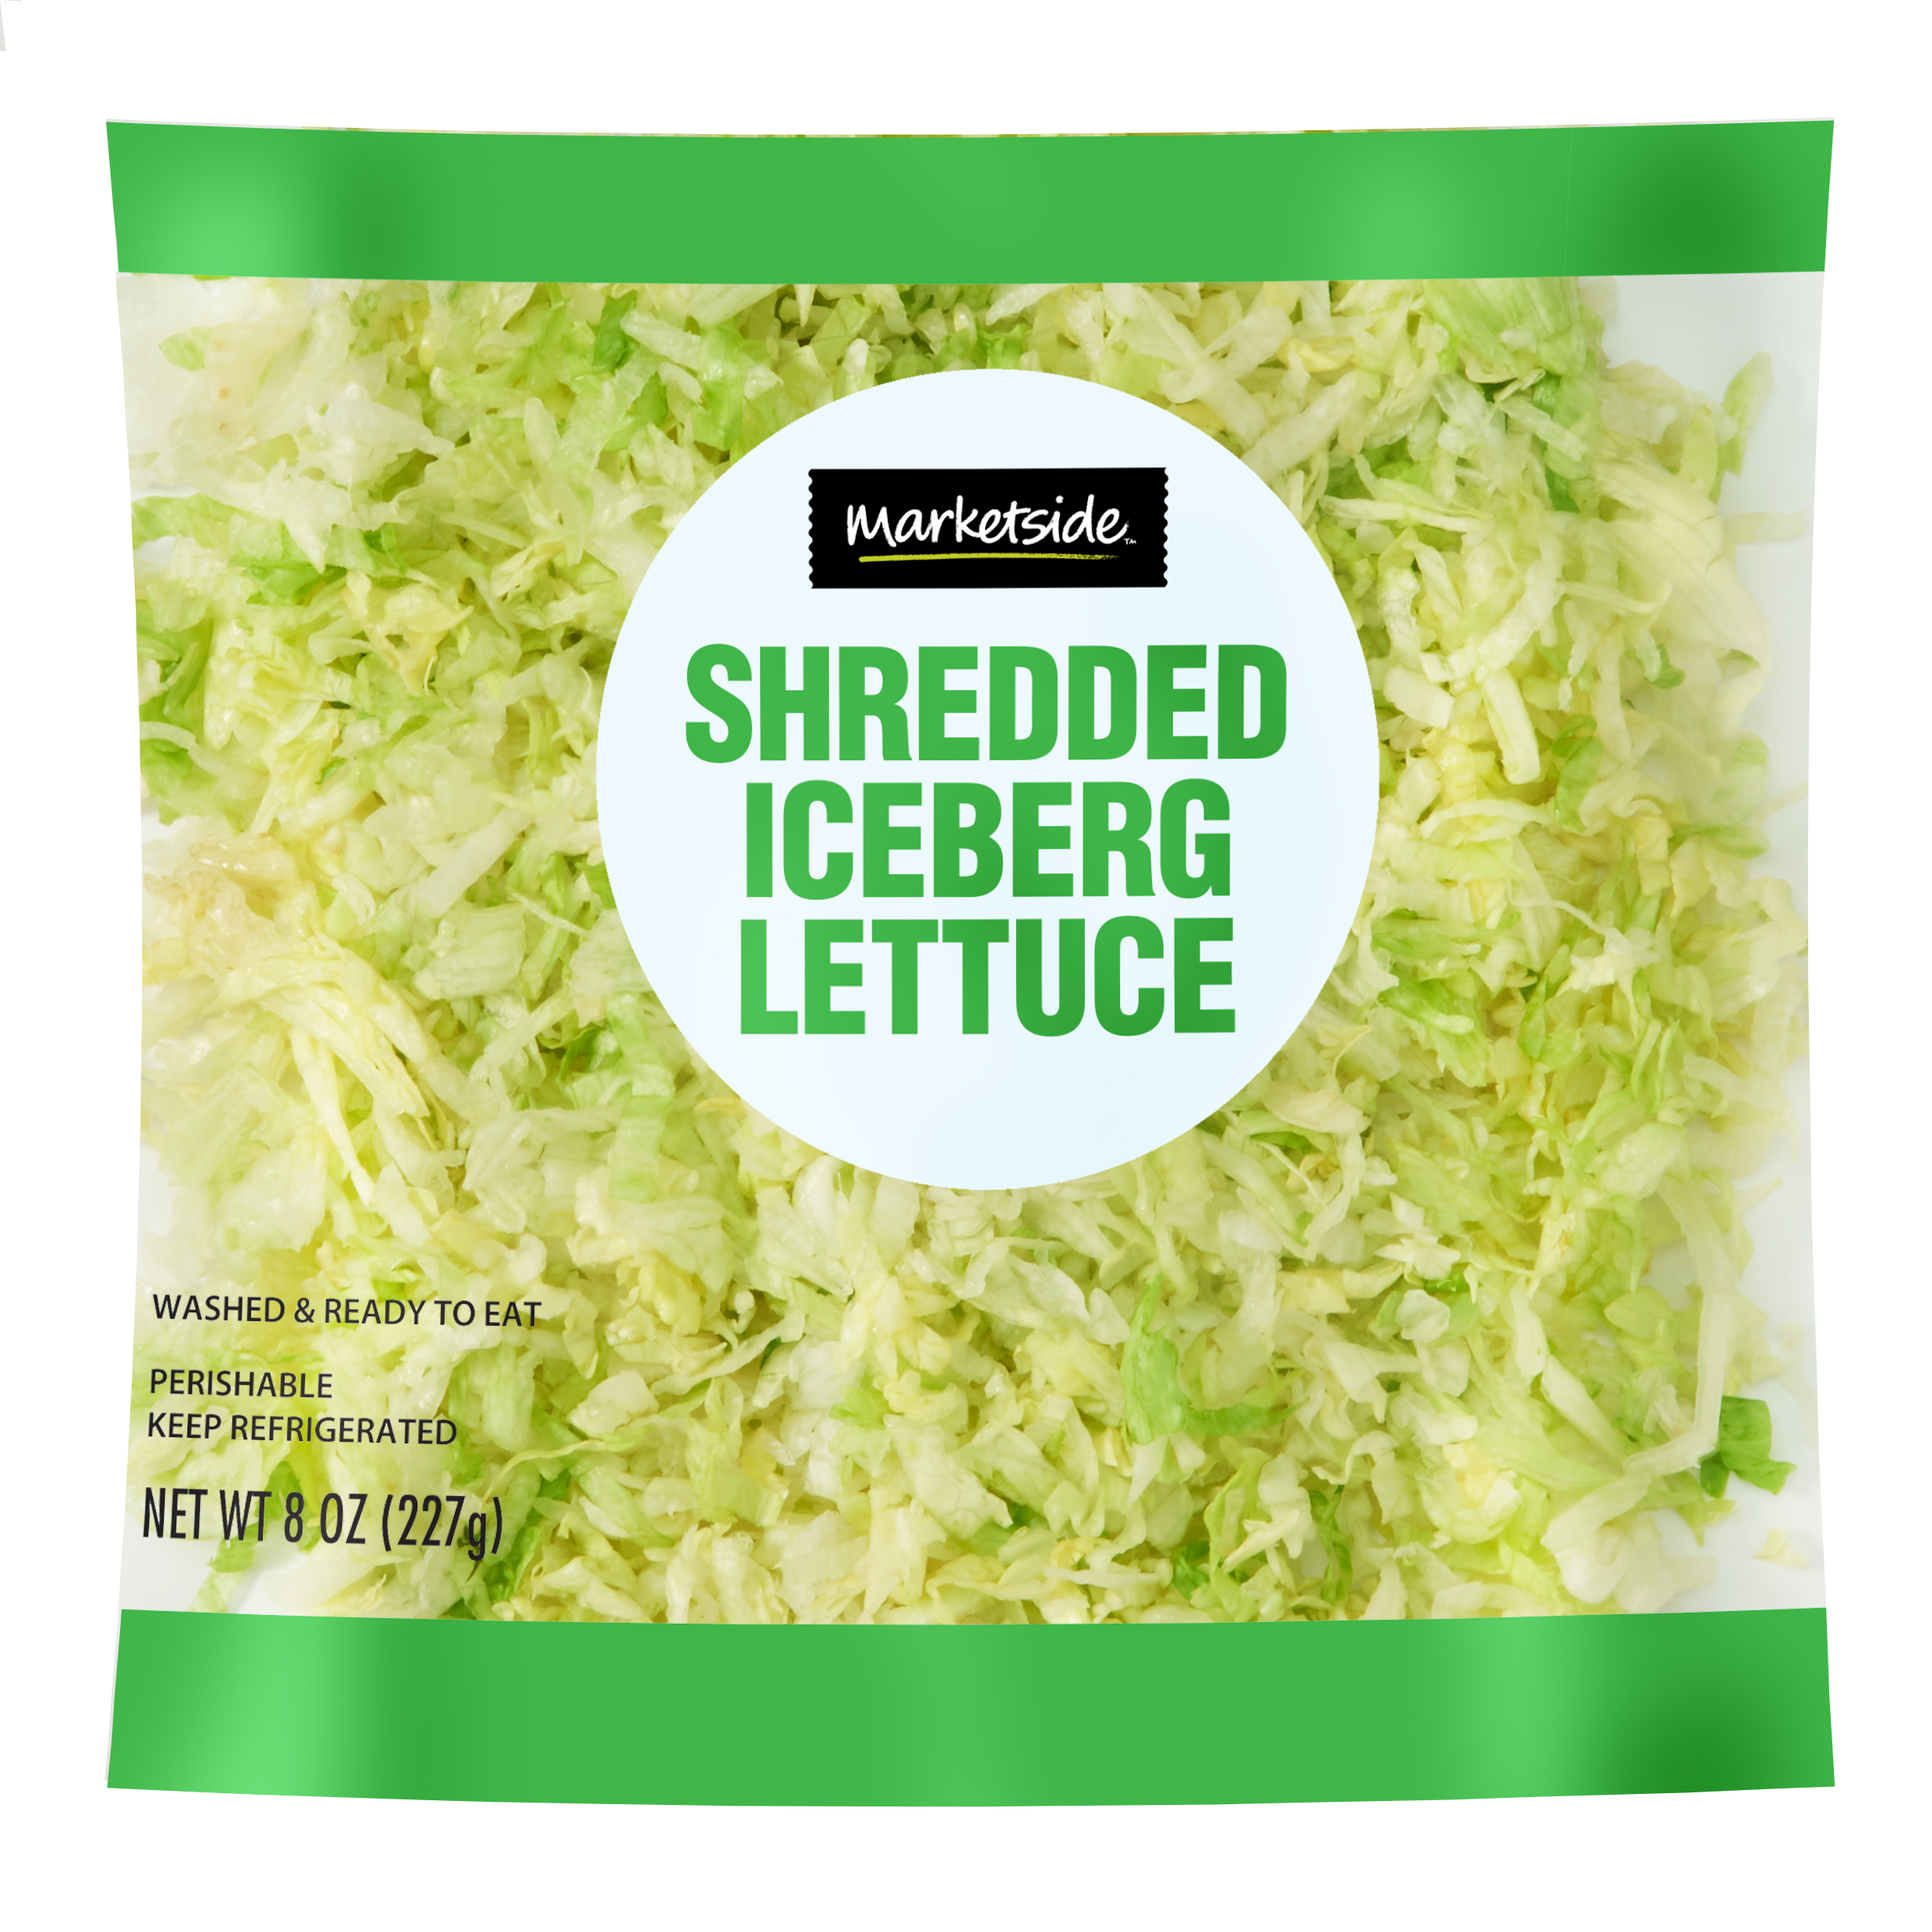 taylor farms shredded iceberg lettuce